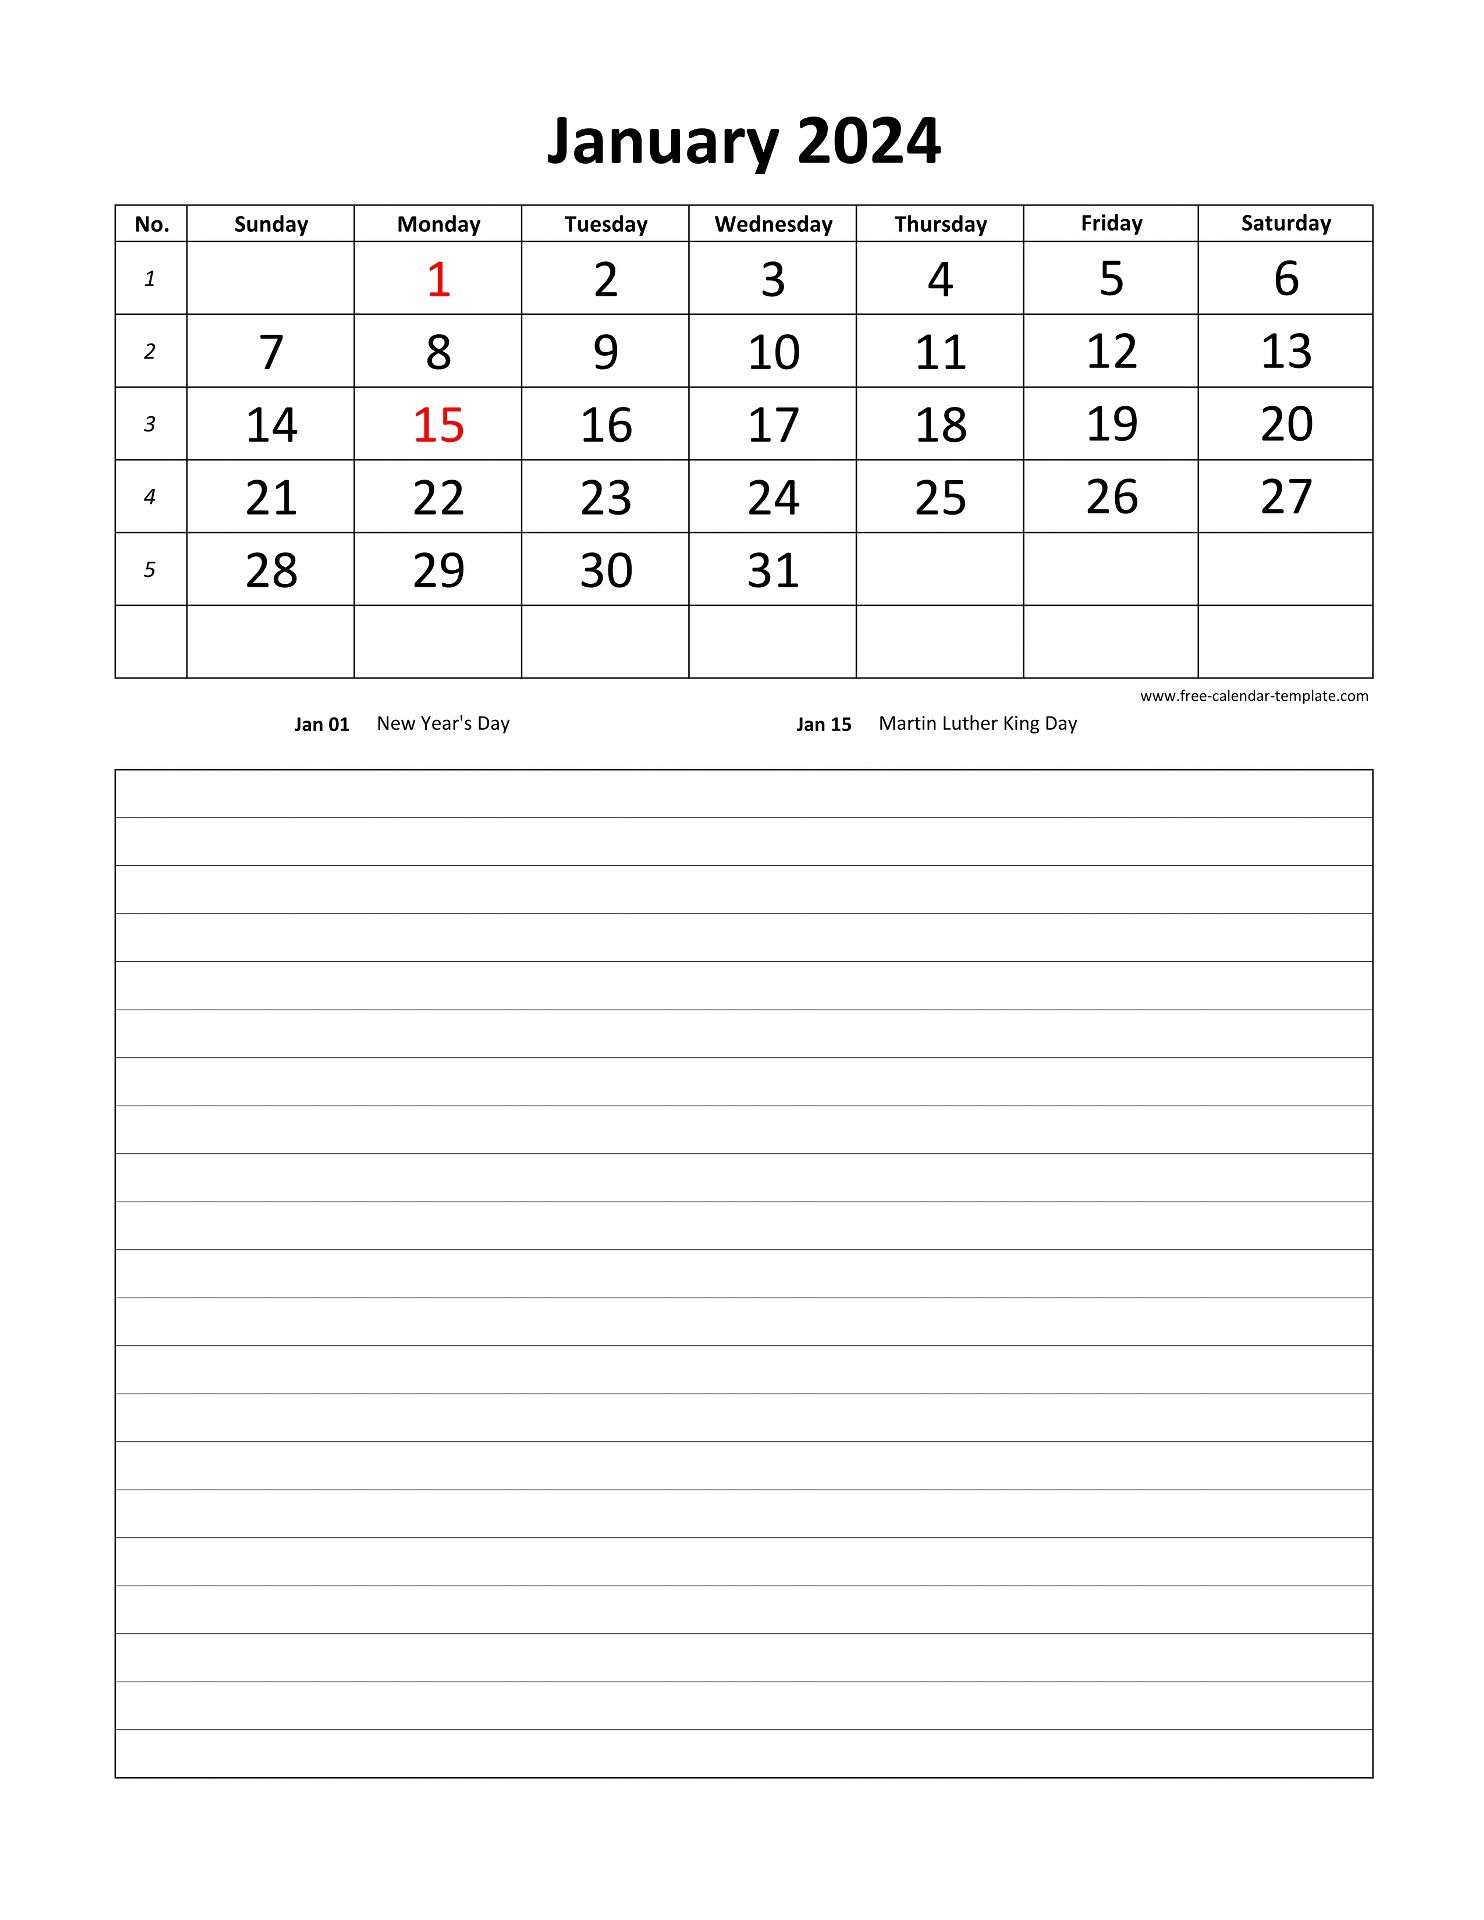 January 2024 Free Calendar Tempplate